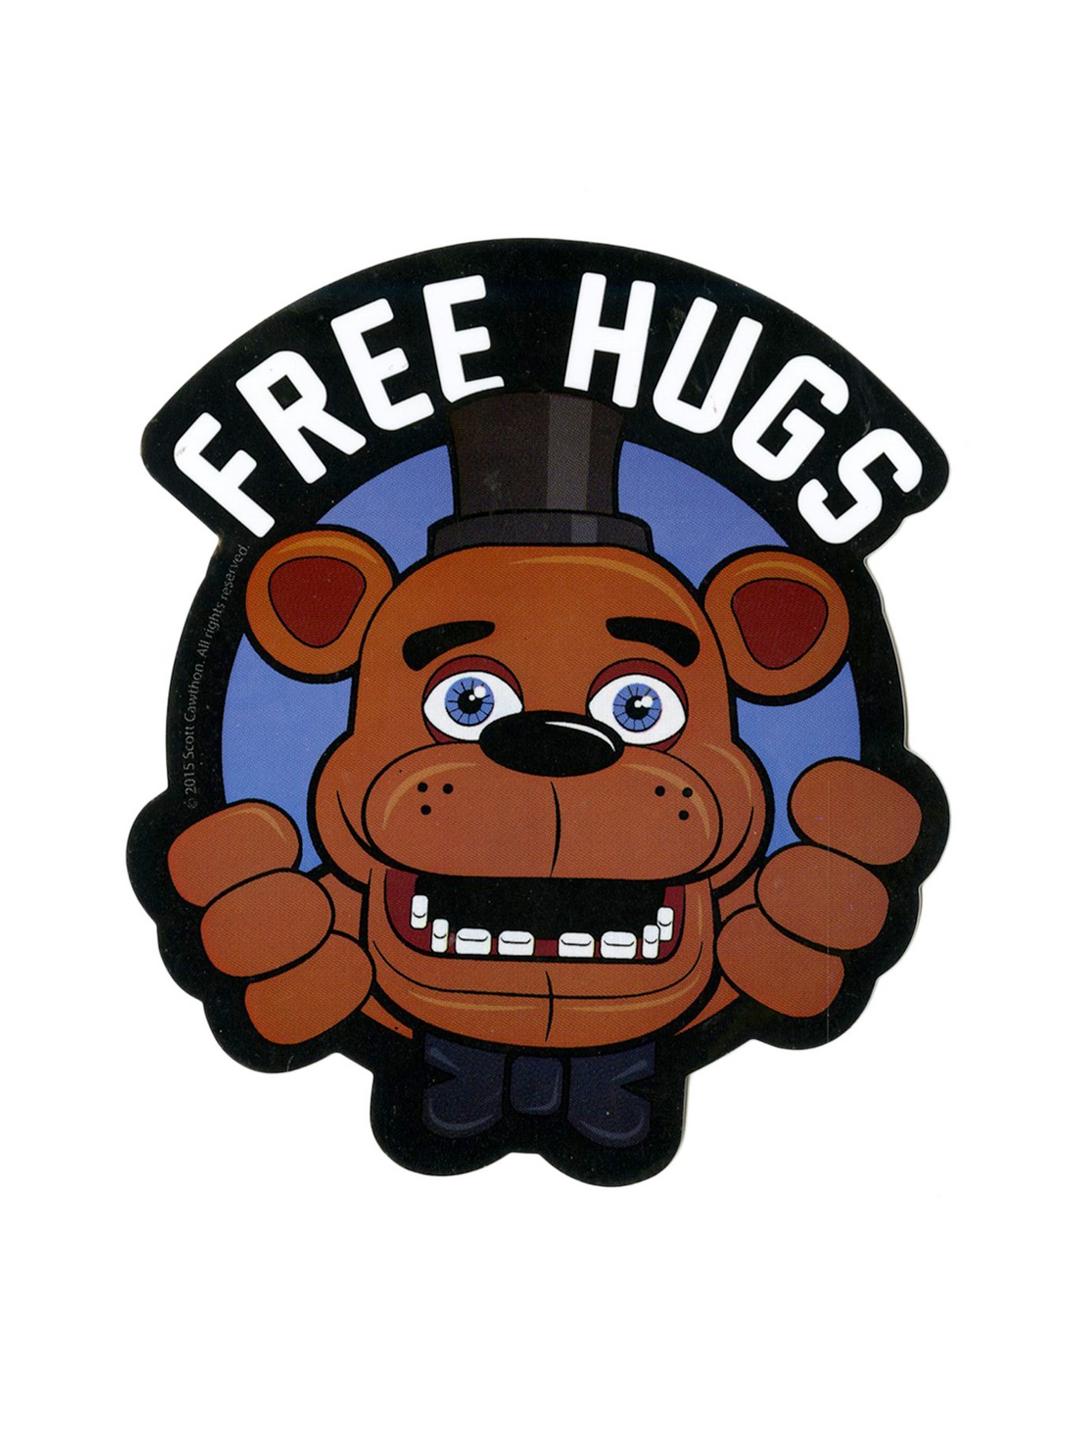 Five Nights At Freddy’s Free Hugs Sticker, , hi-res